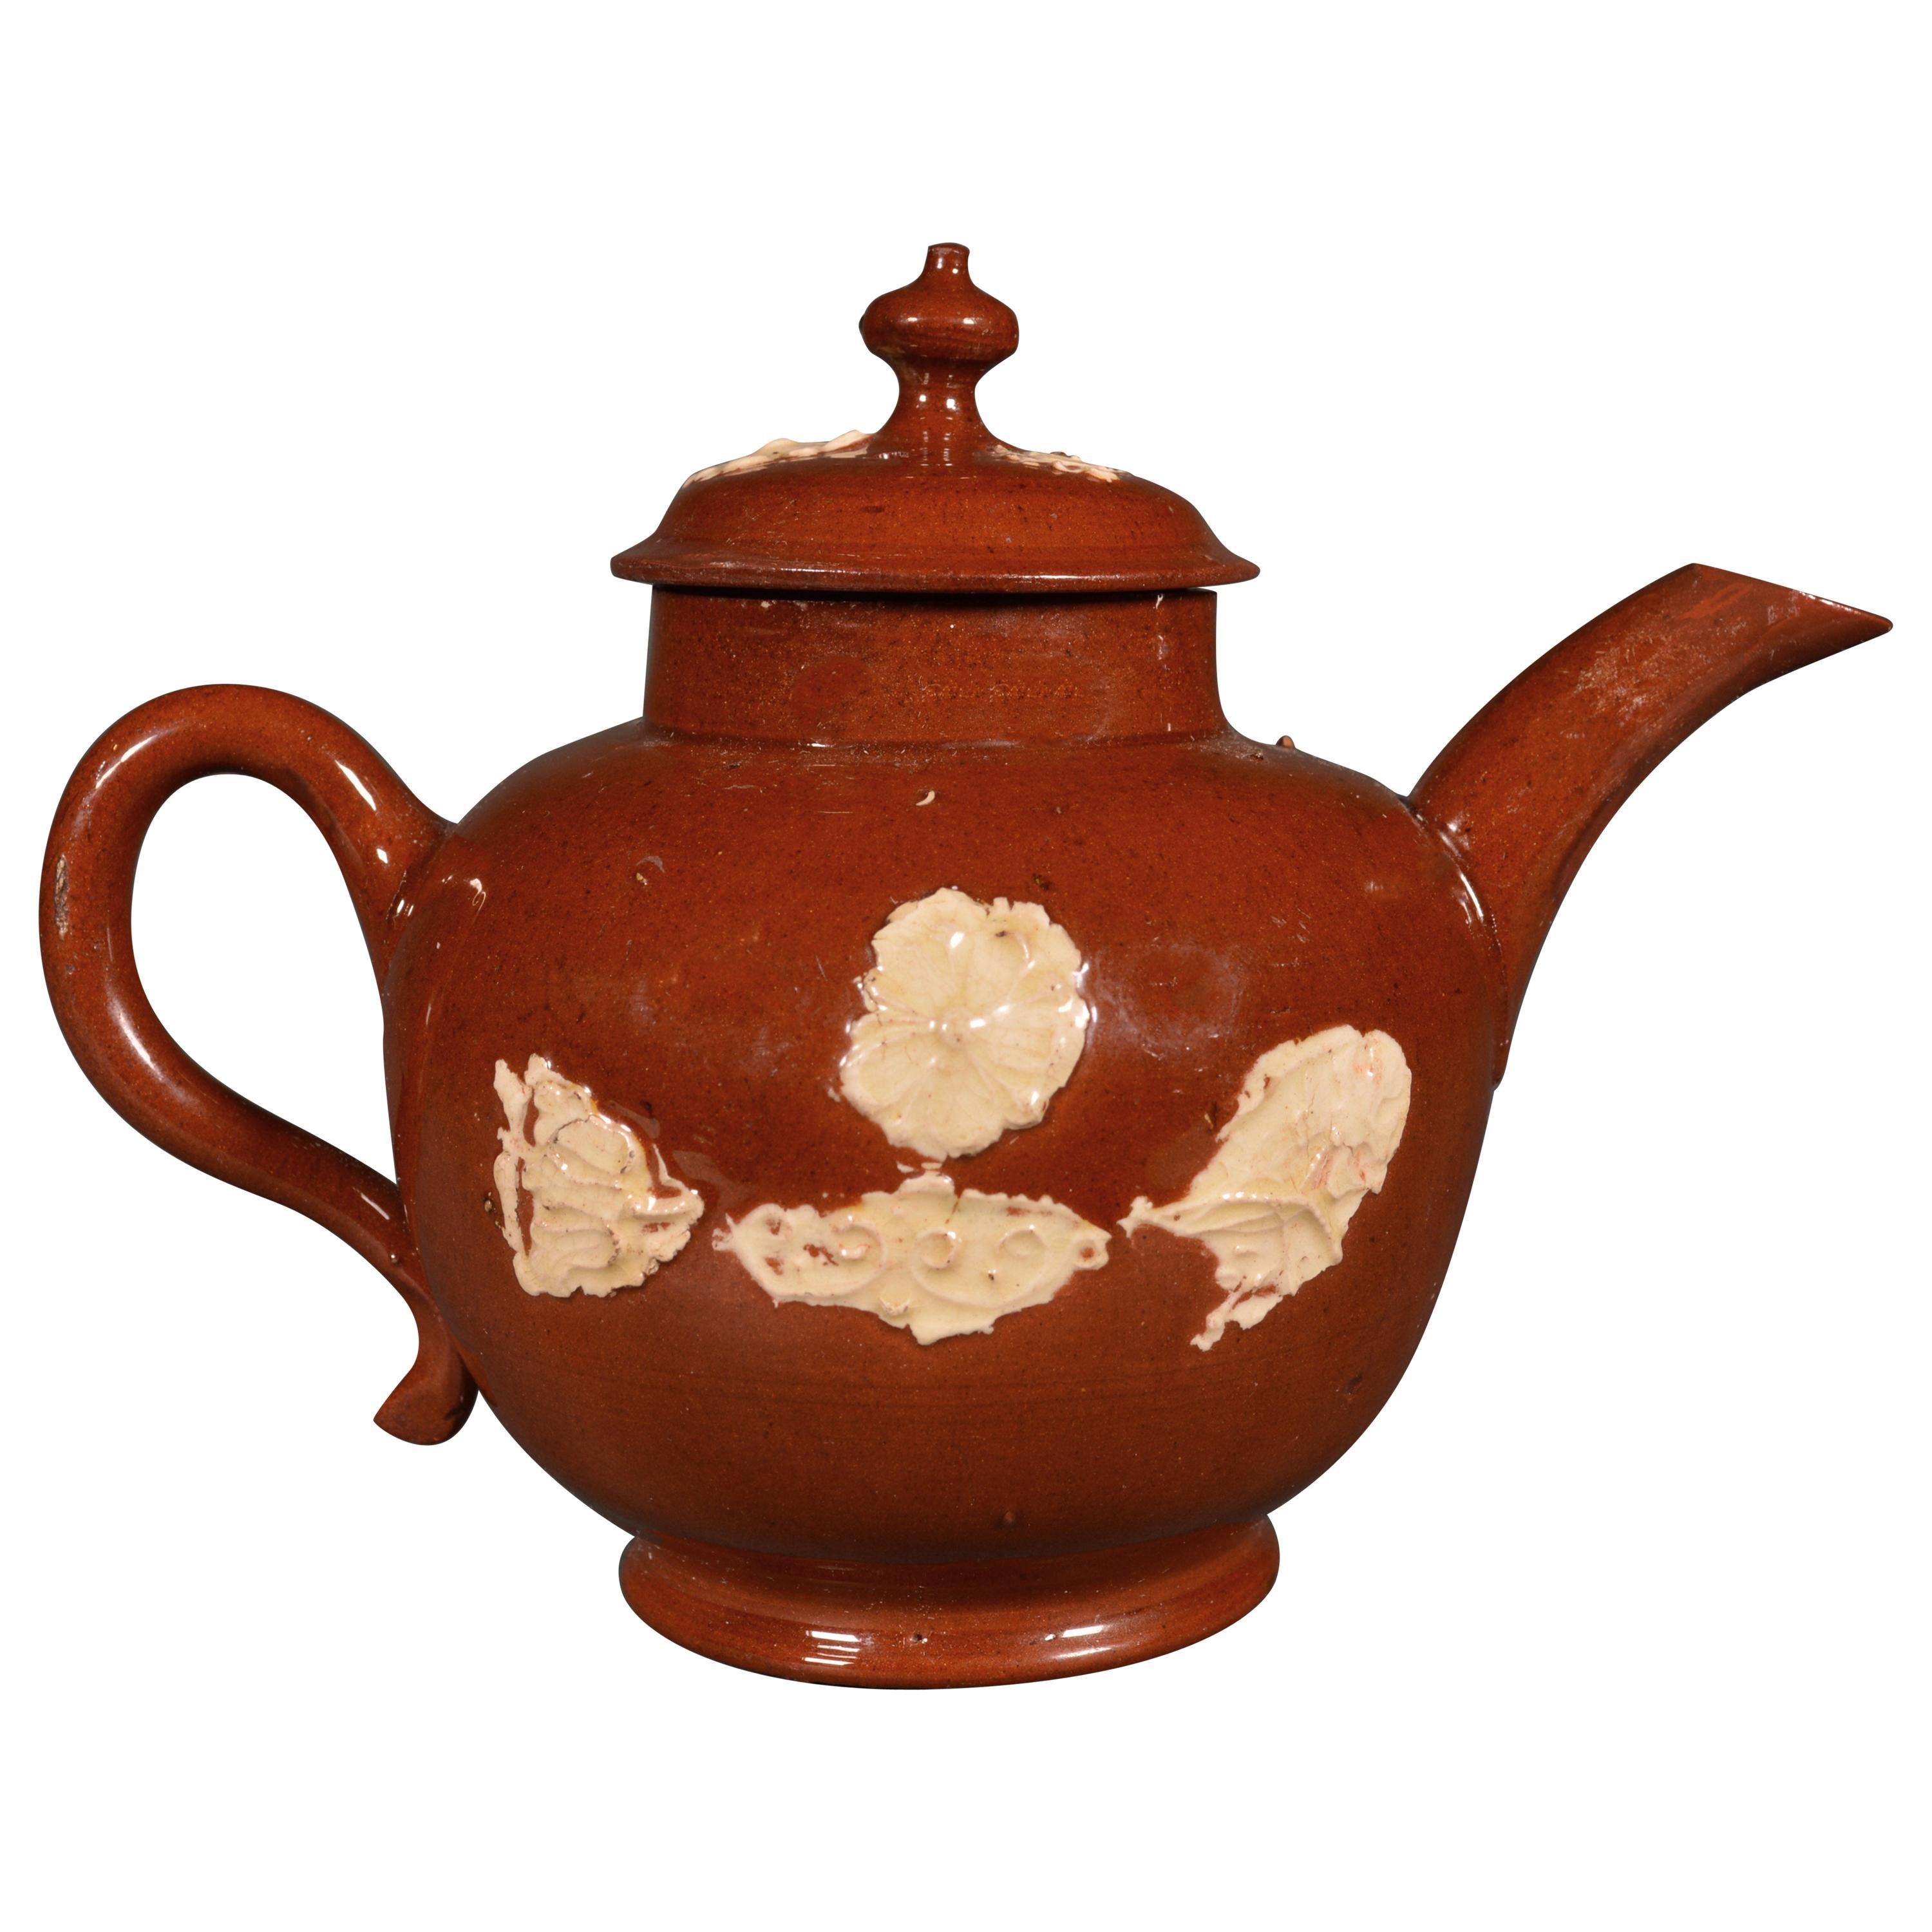 Early English Staffordshire Pottery Redware Teapot, circa 1740-1750